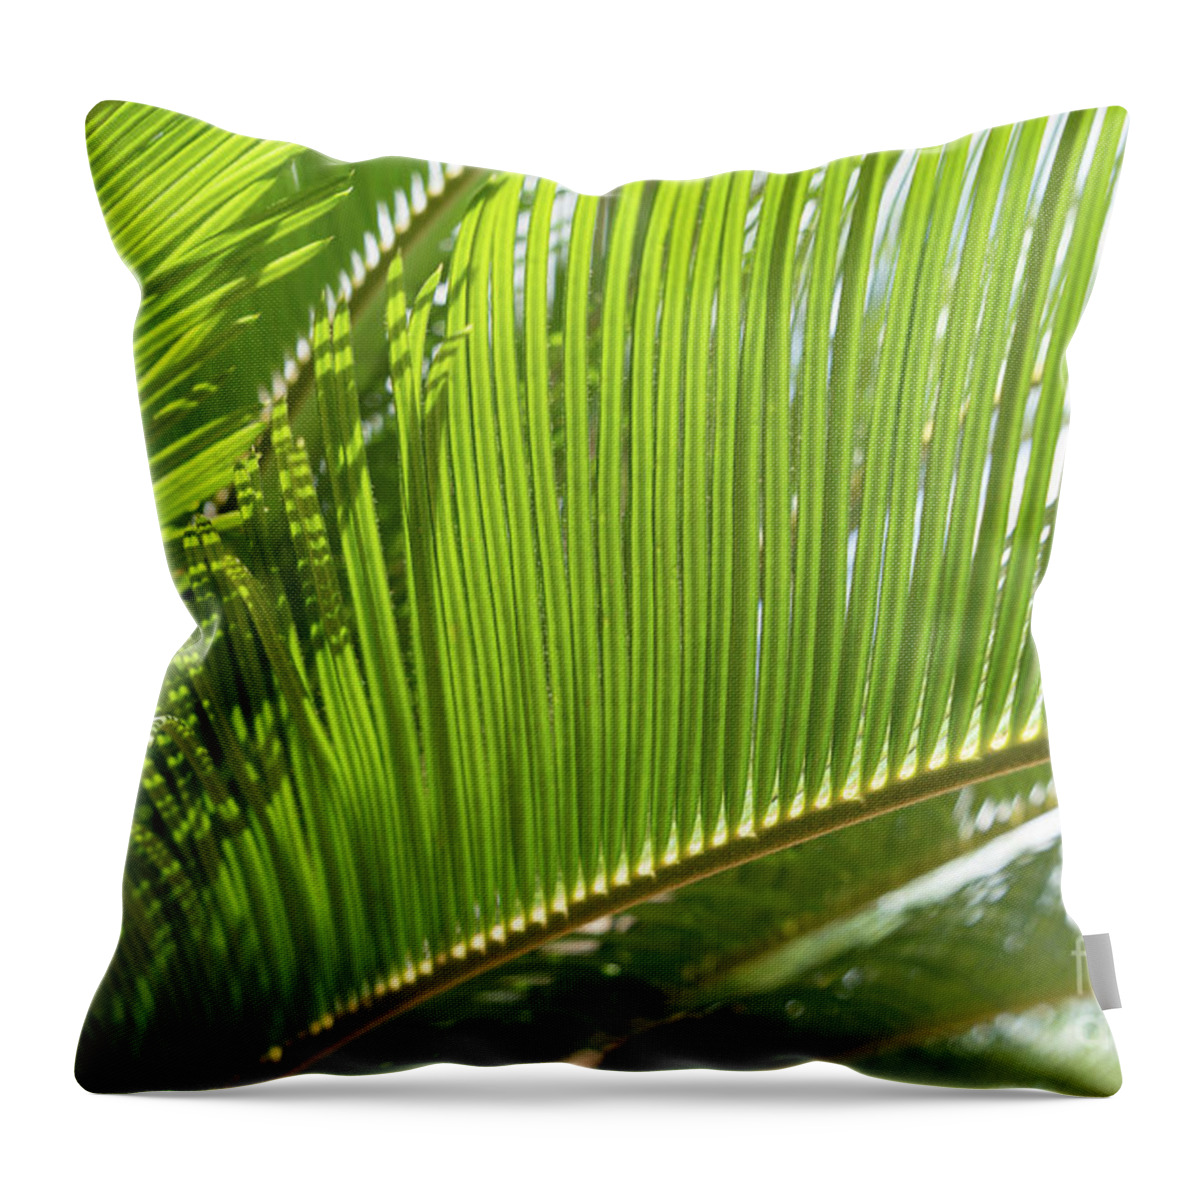 Palm Fern Throw Pillow featuring the photograph Green palm fern and Mediterranean sunlight by Adriana Mueller